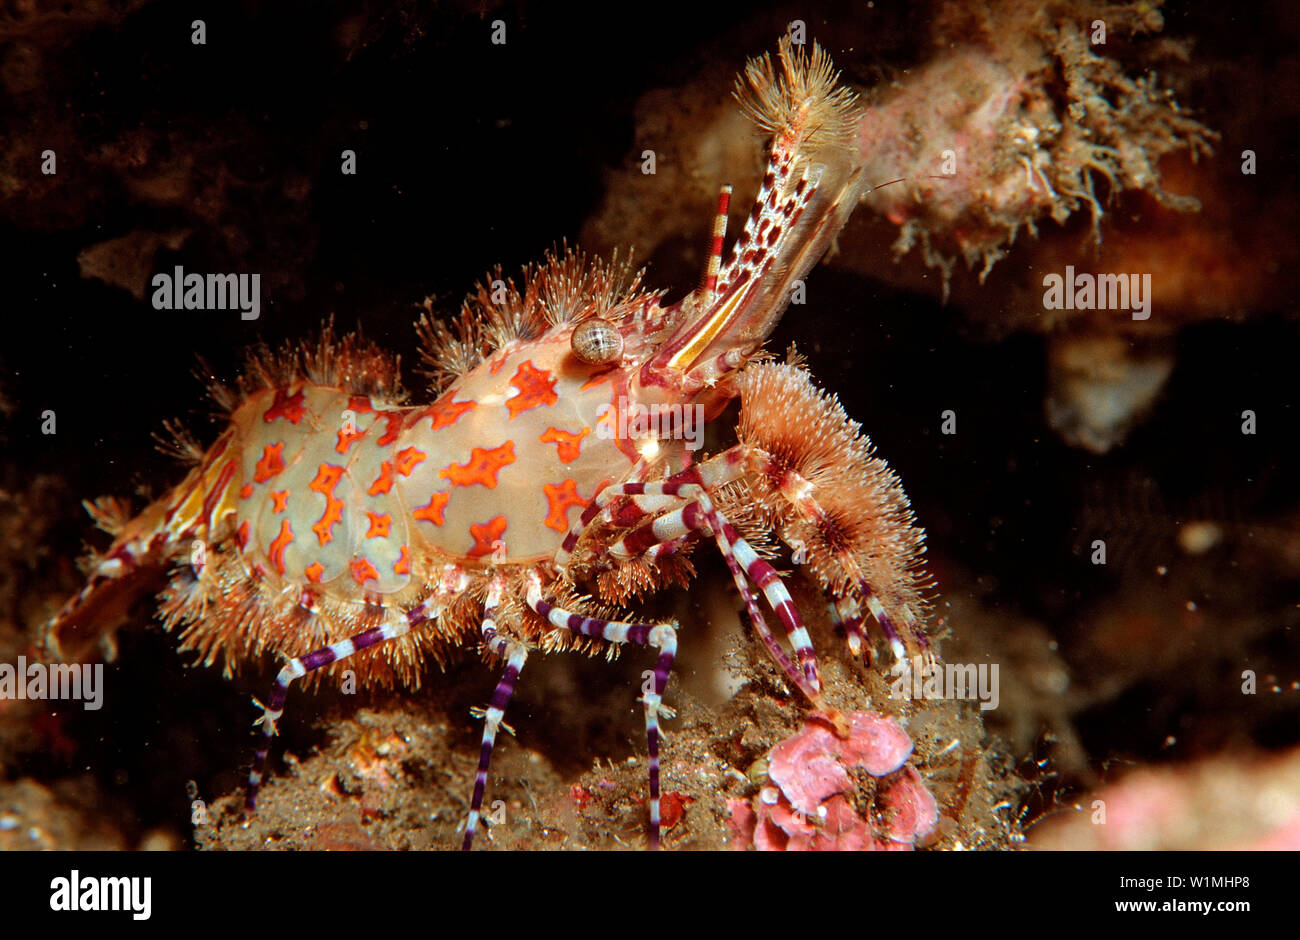 Marbled shrimp, Saron sp., Komodo National Park, Indian Ocean, Indonesia Stock Photo